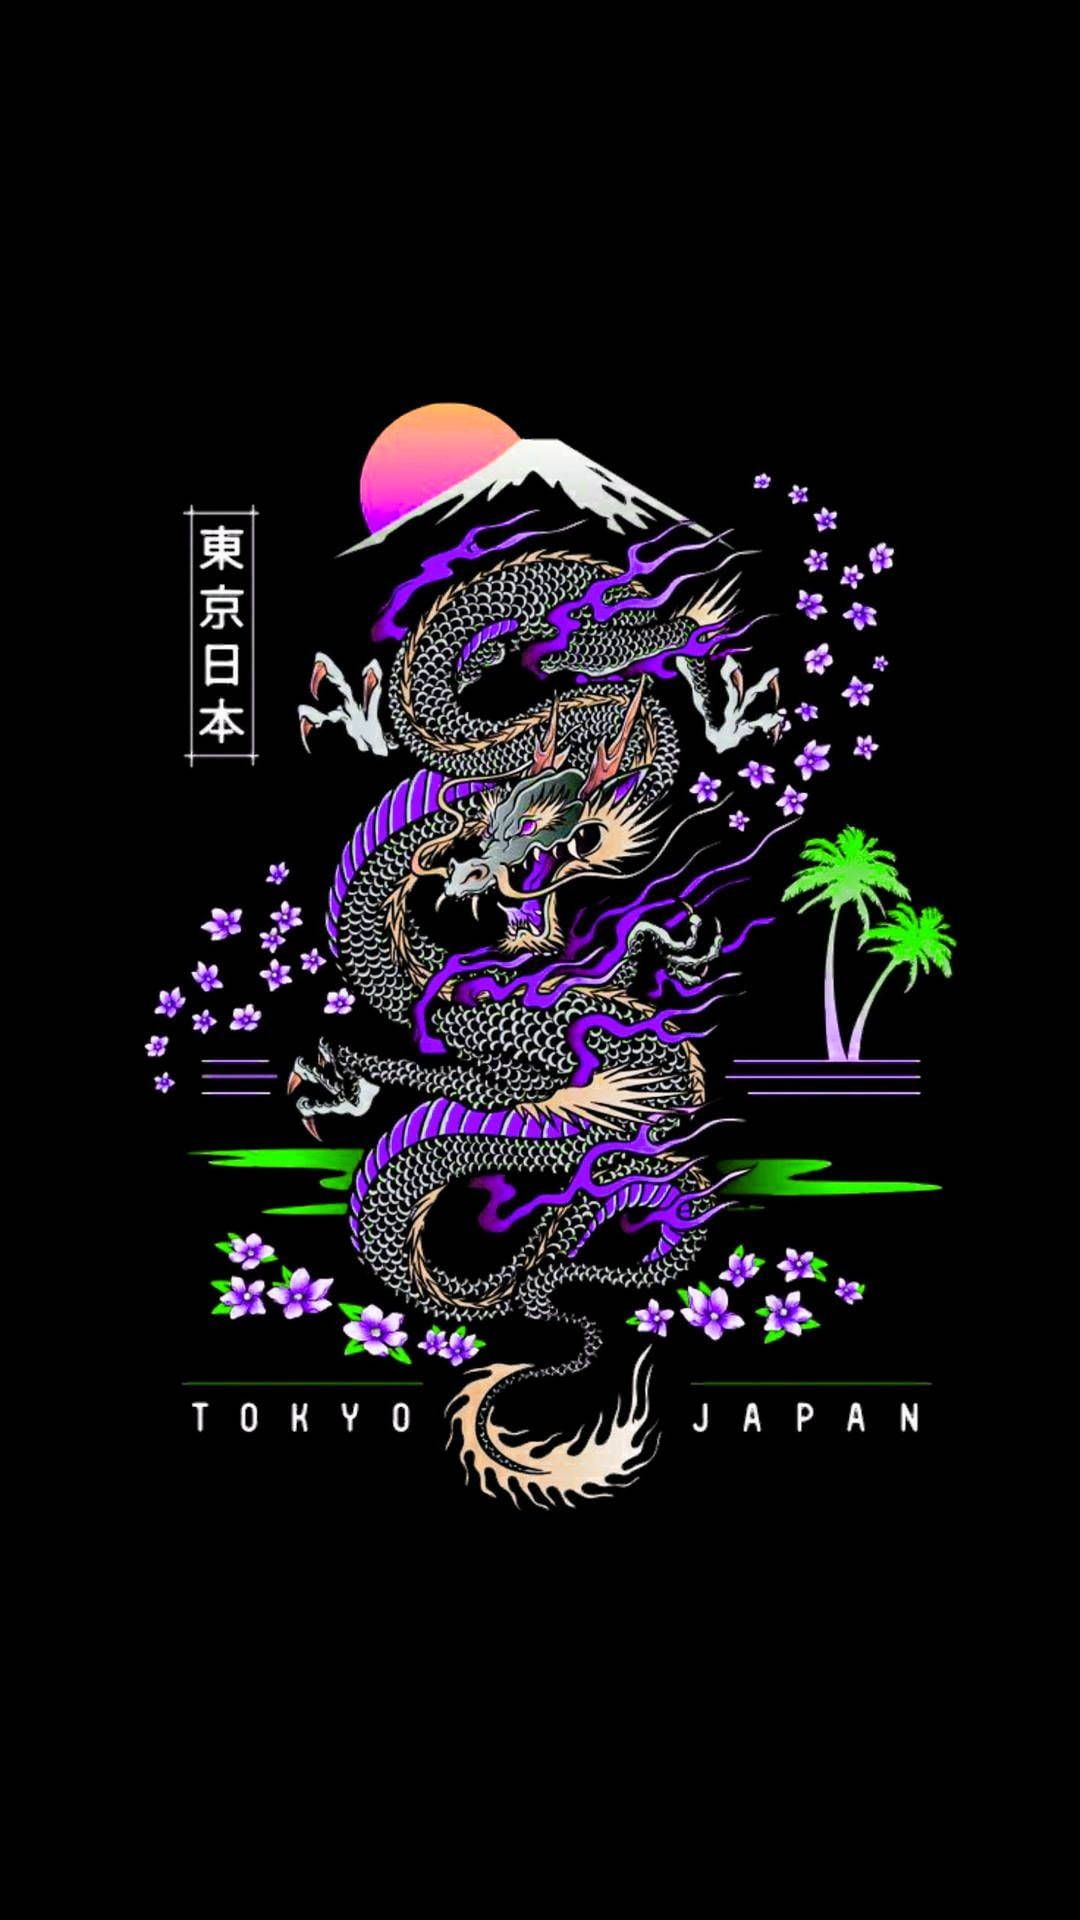 Free Japanese Dragon Art Wallpaper Downloads, Japanese Dragon Art Wallpaper for FREE